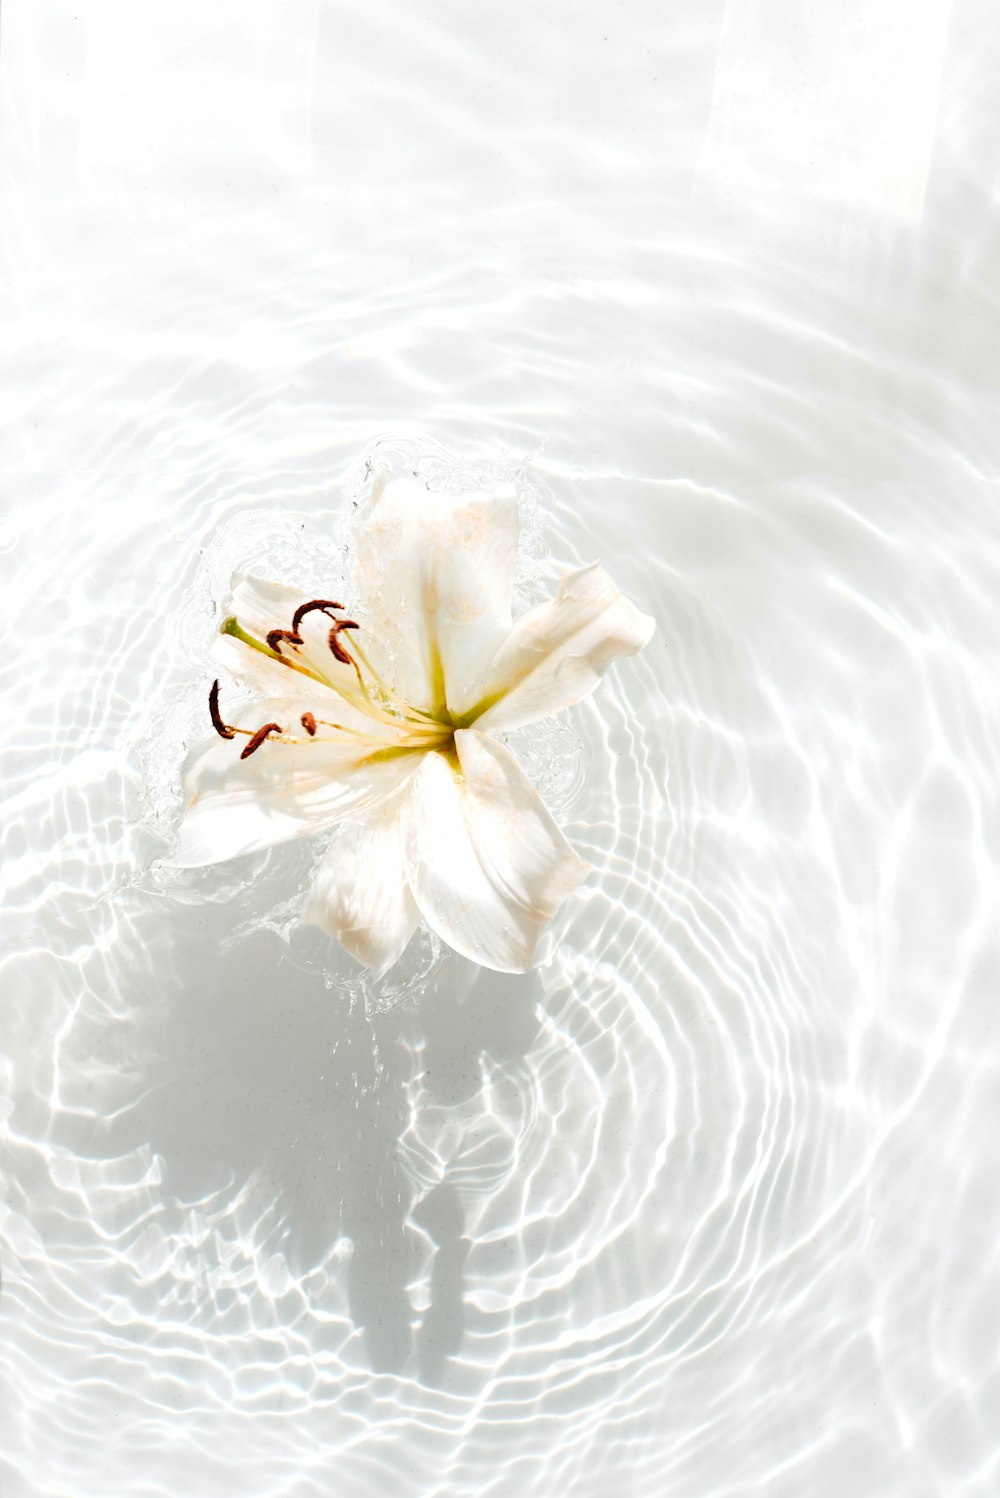 Light Flower Pictures | Download Free Images on Unsplash